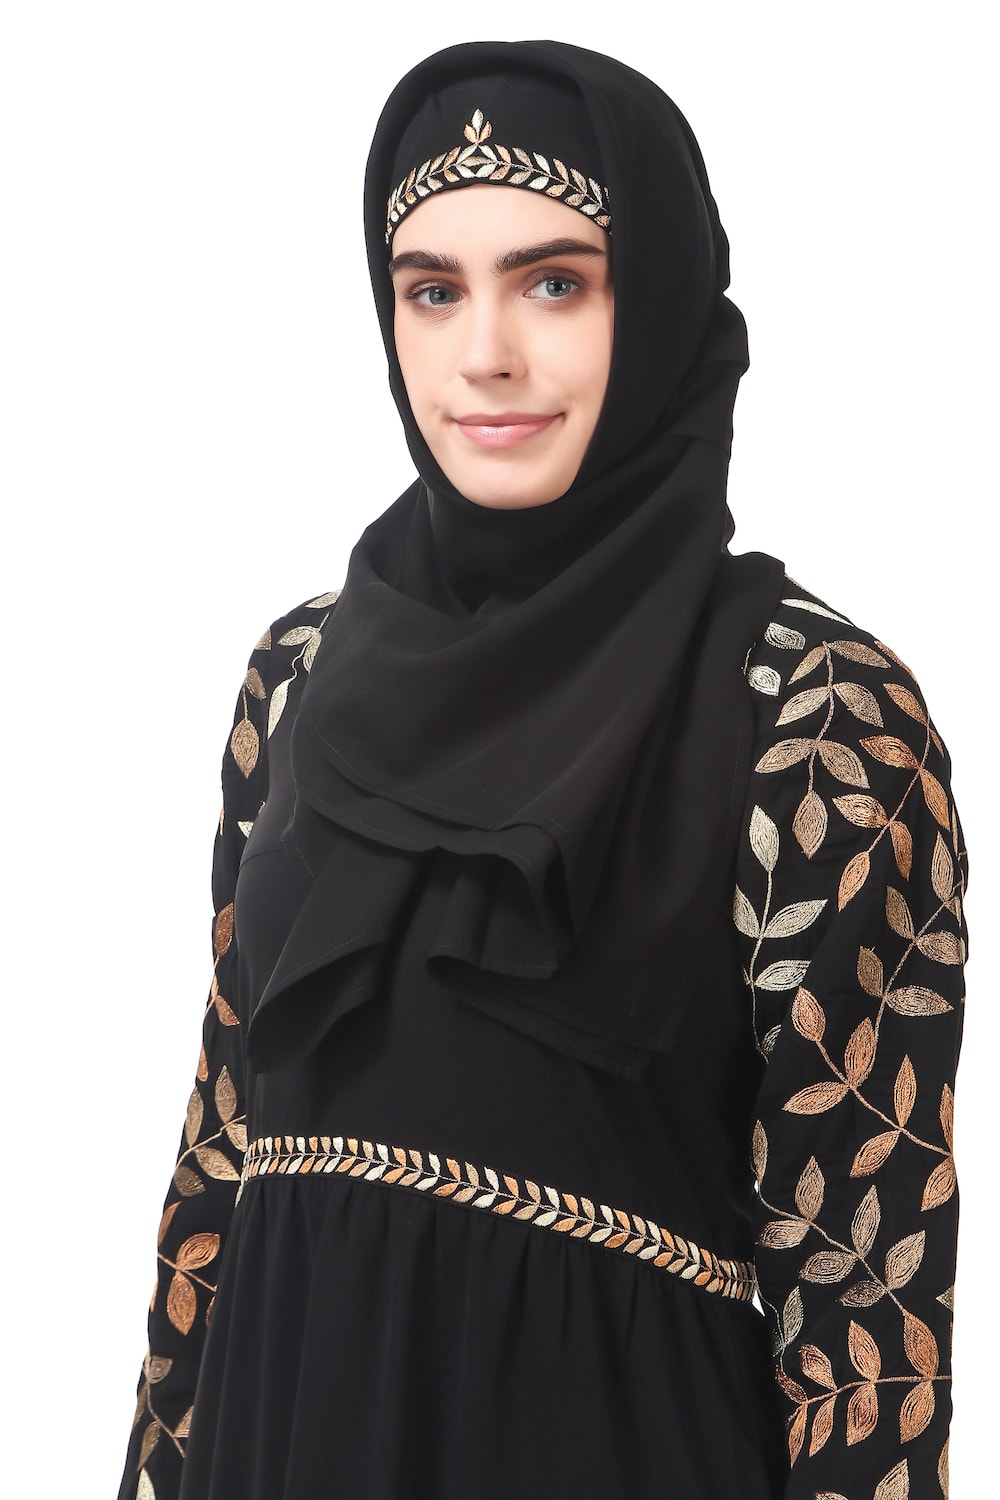 Metallic Leaf Embellished Nida Abaya Hijab